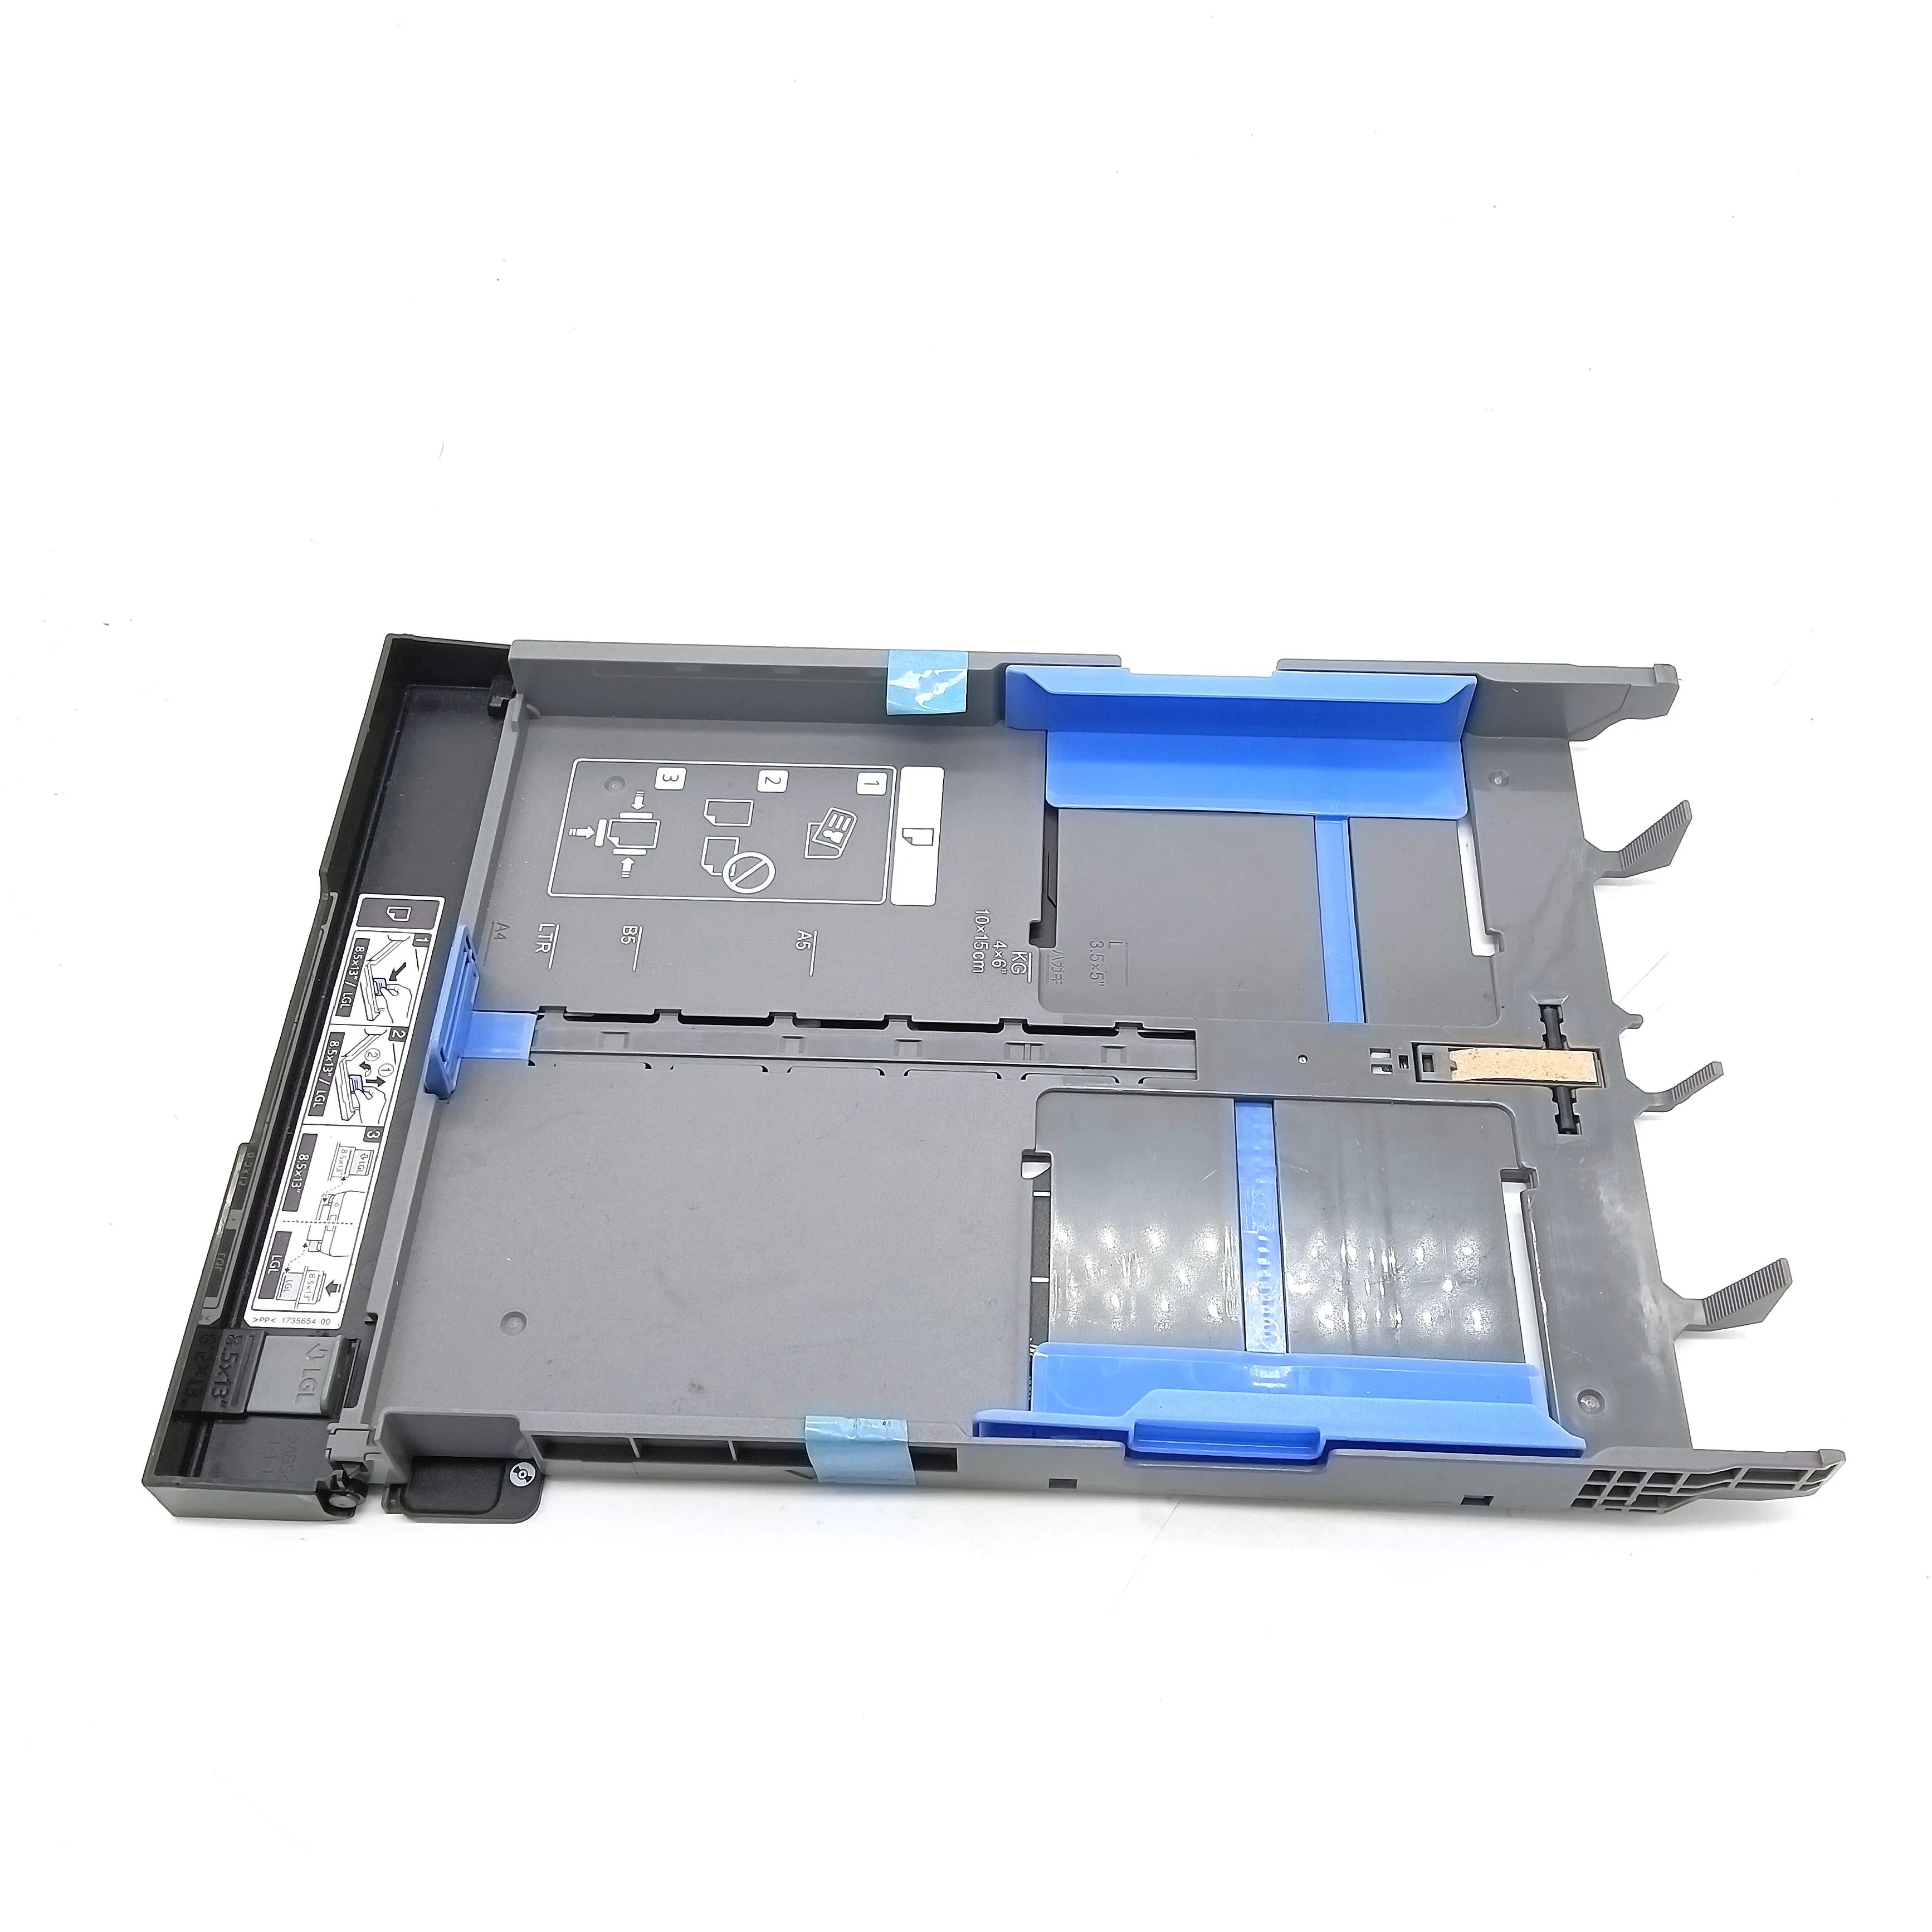 

Paper Input Tray XP-15080 Fits For Epson XP-15010 XP-15081 XP-15000 XP-15050